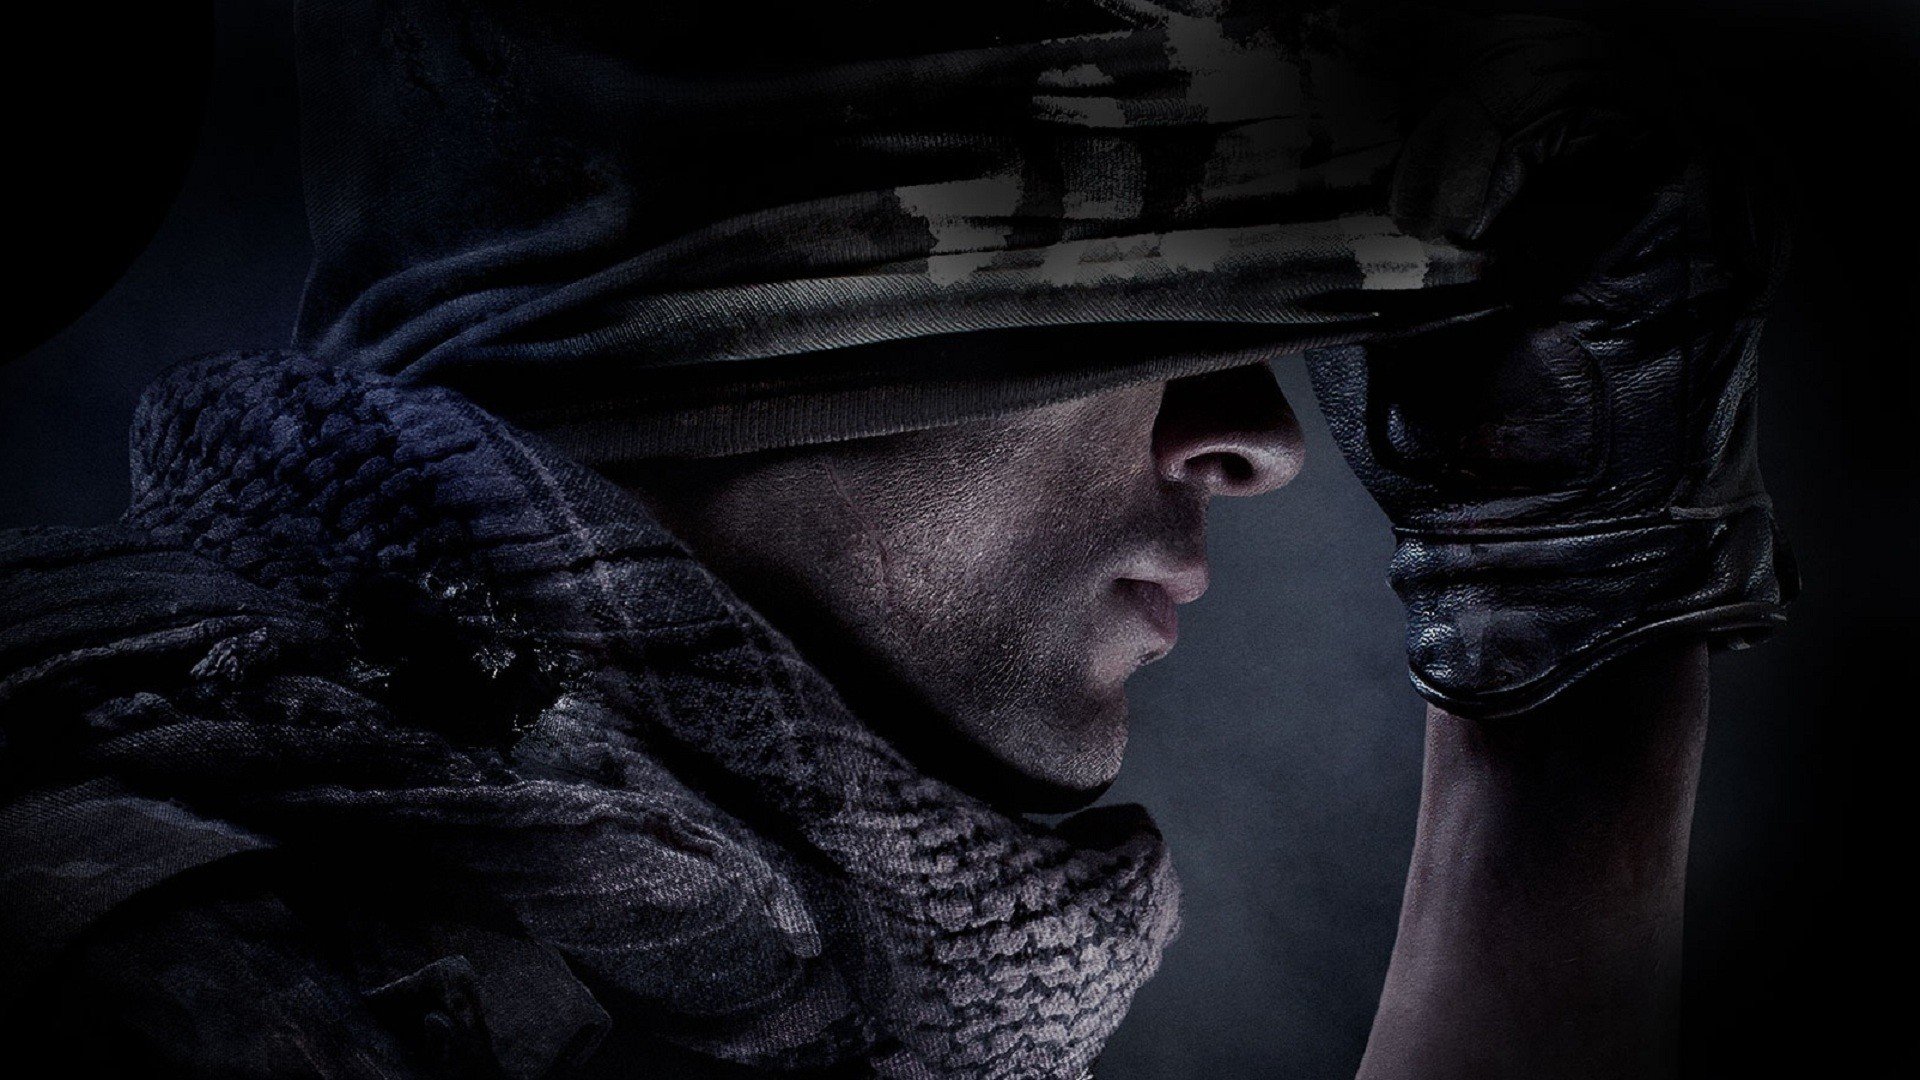 Best Call Of Duty (COD) wallpaper ID:219019 for High Resolution full hd 1080p desktop